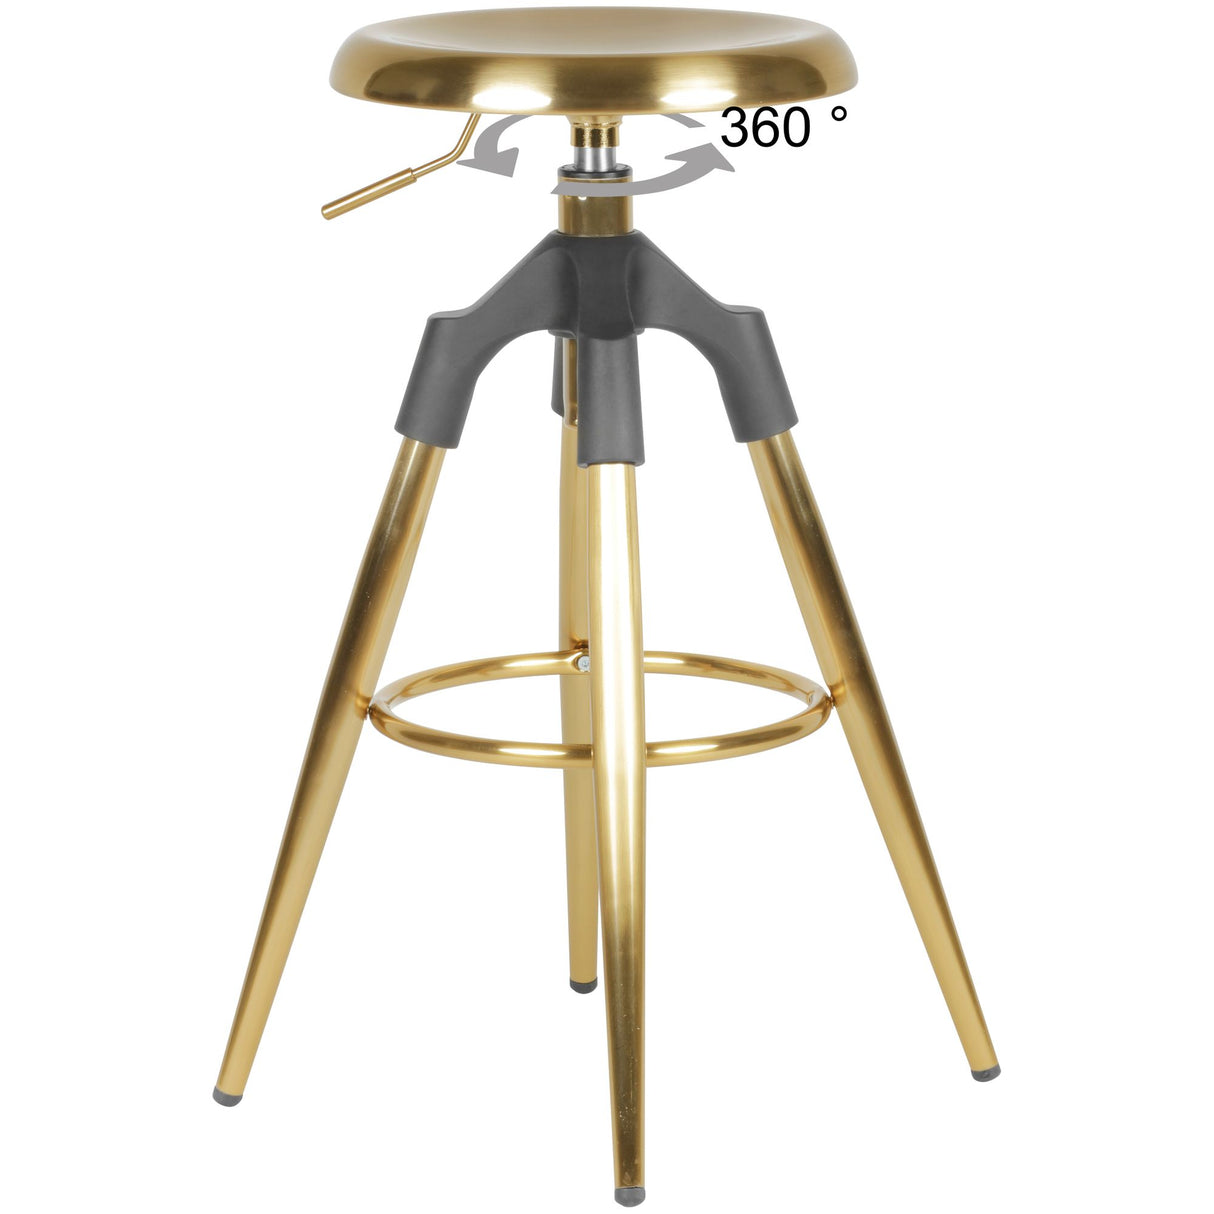 WOHNLING Barhocker Gold Metall 72-80 cm, Design Barstuhl 100 kg Maximalbelastbarkeit, Tresenhocker Industrial, Tresenstuhl ohne Lehne